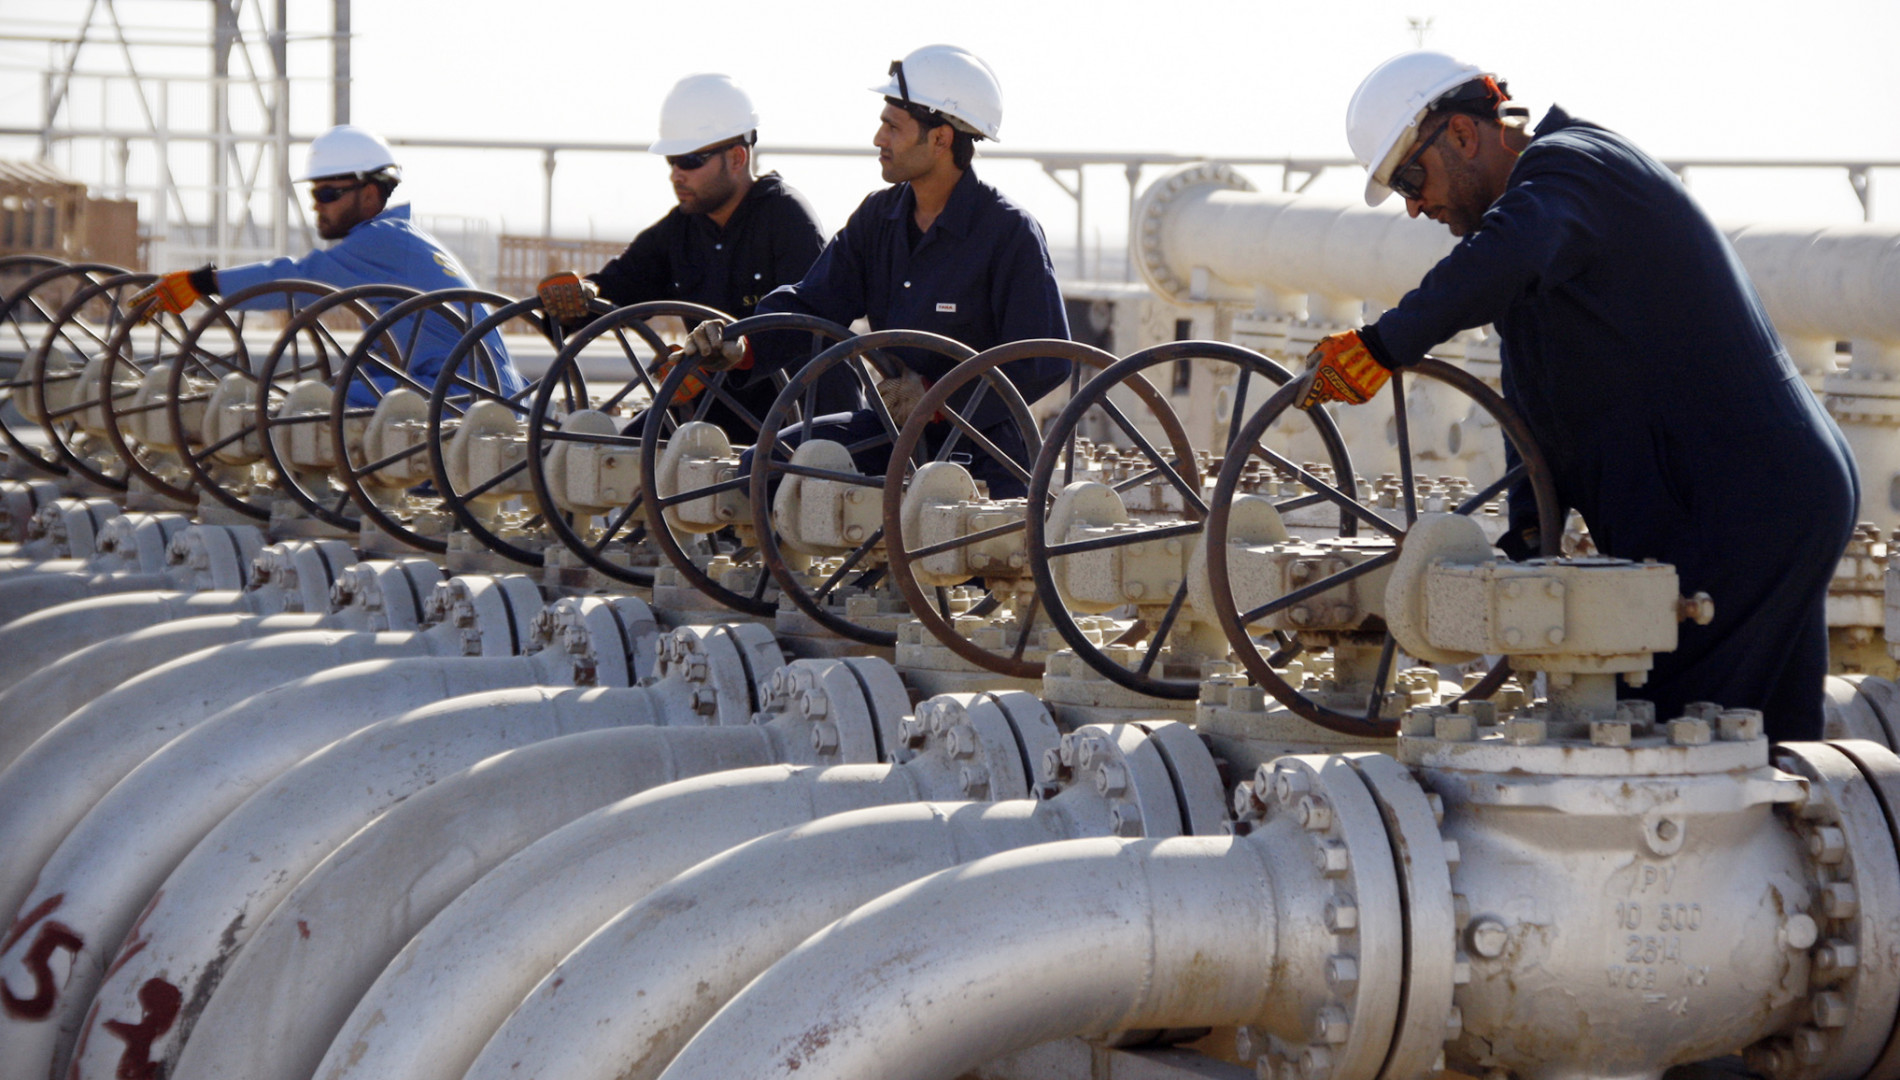 U.S. crude imports from Iraq surged last week, EIA says